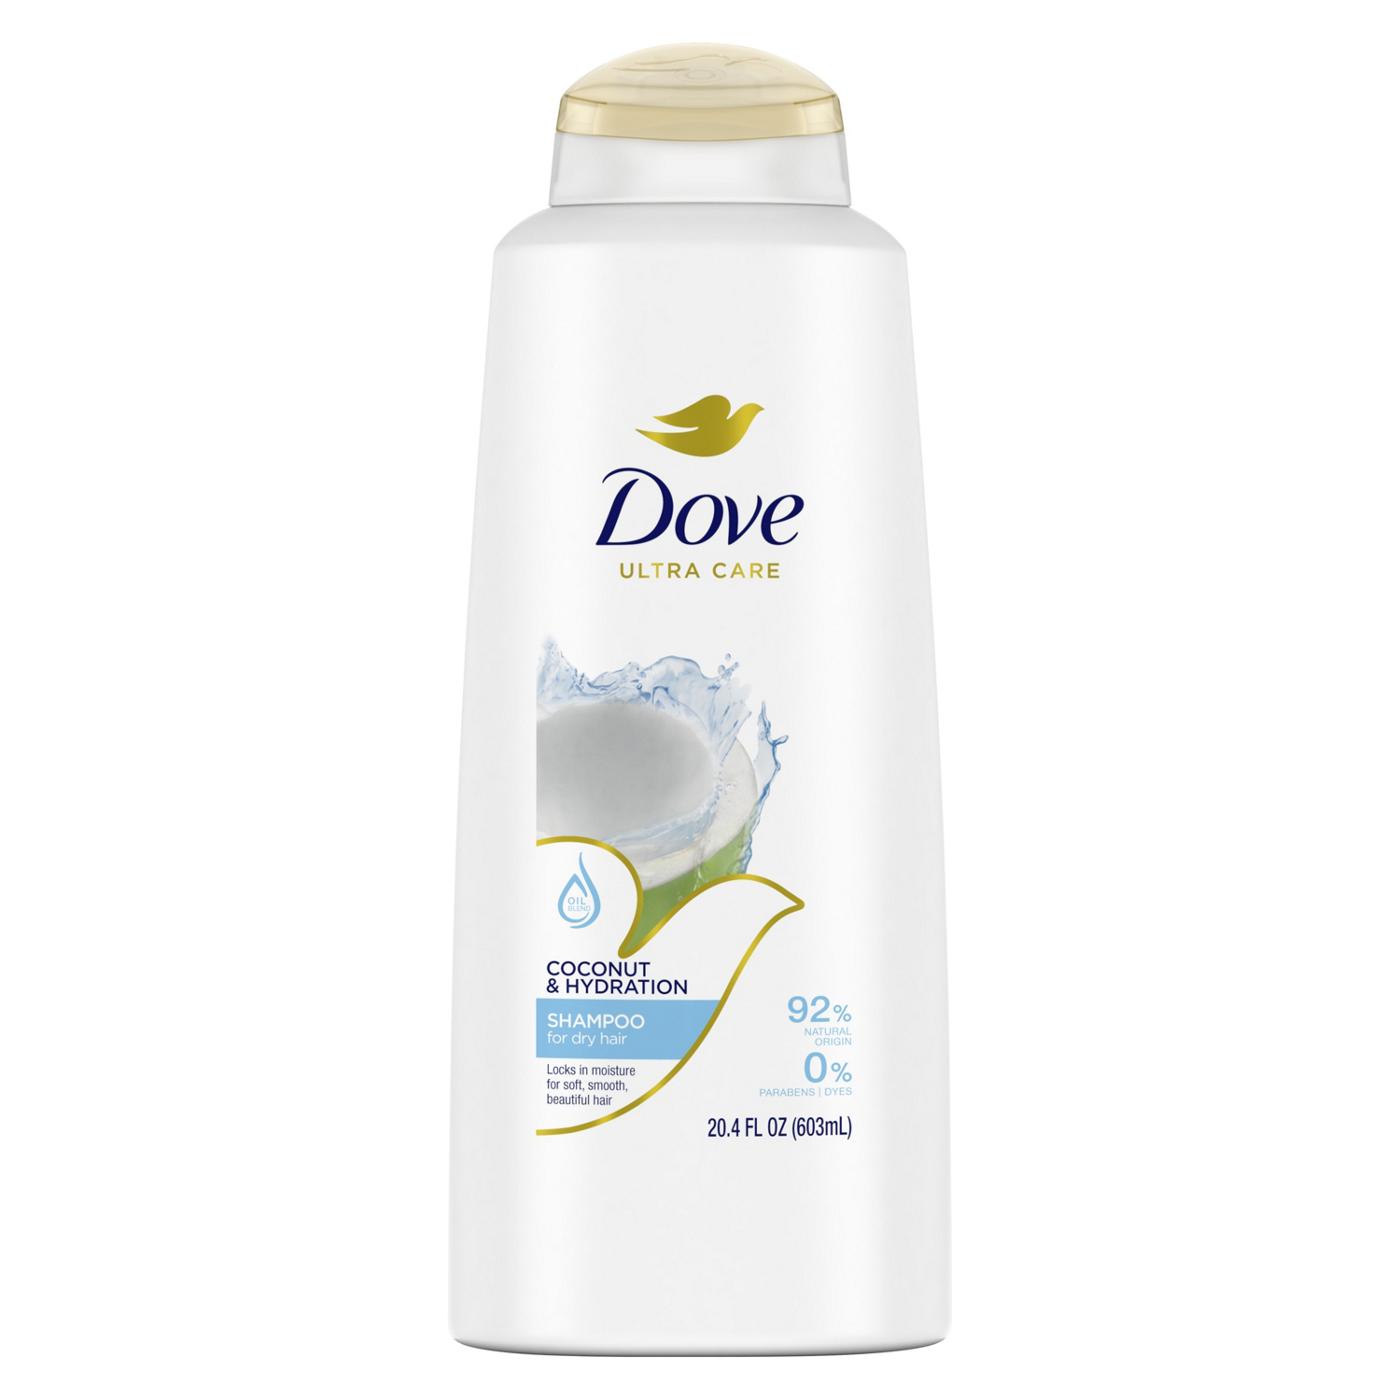 Dove Ultra Care Shampoo - Coconut & Hydration; image 1 of 11